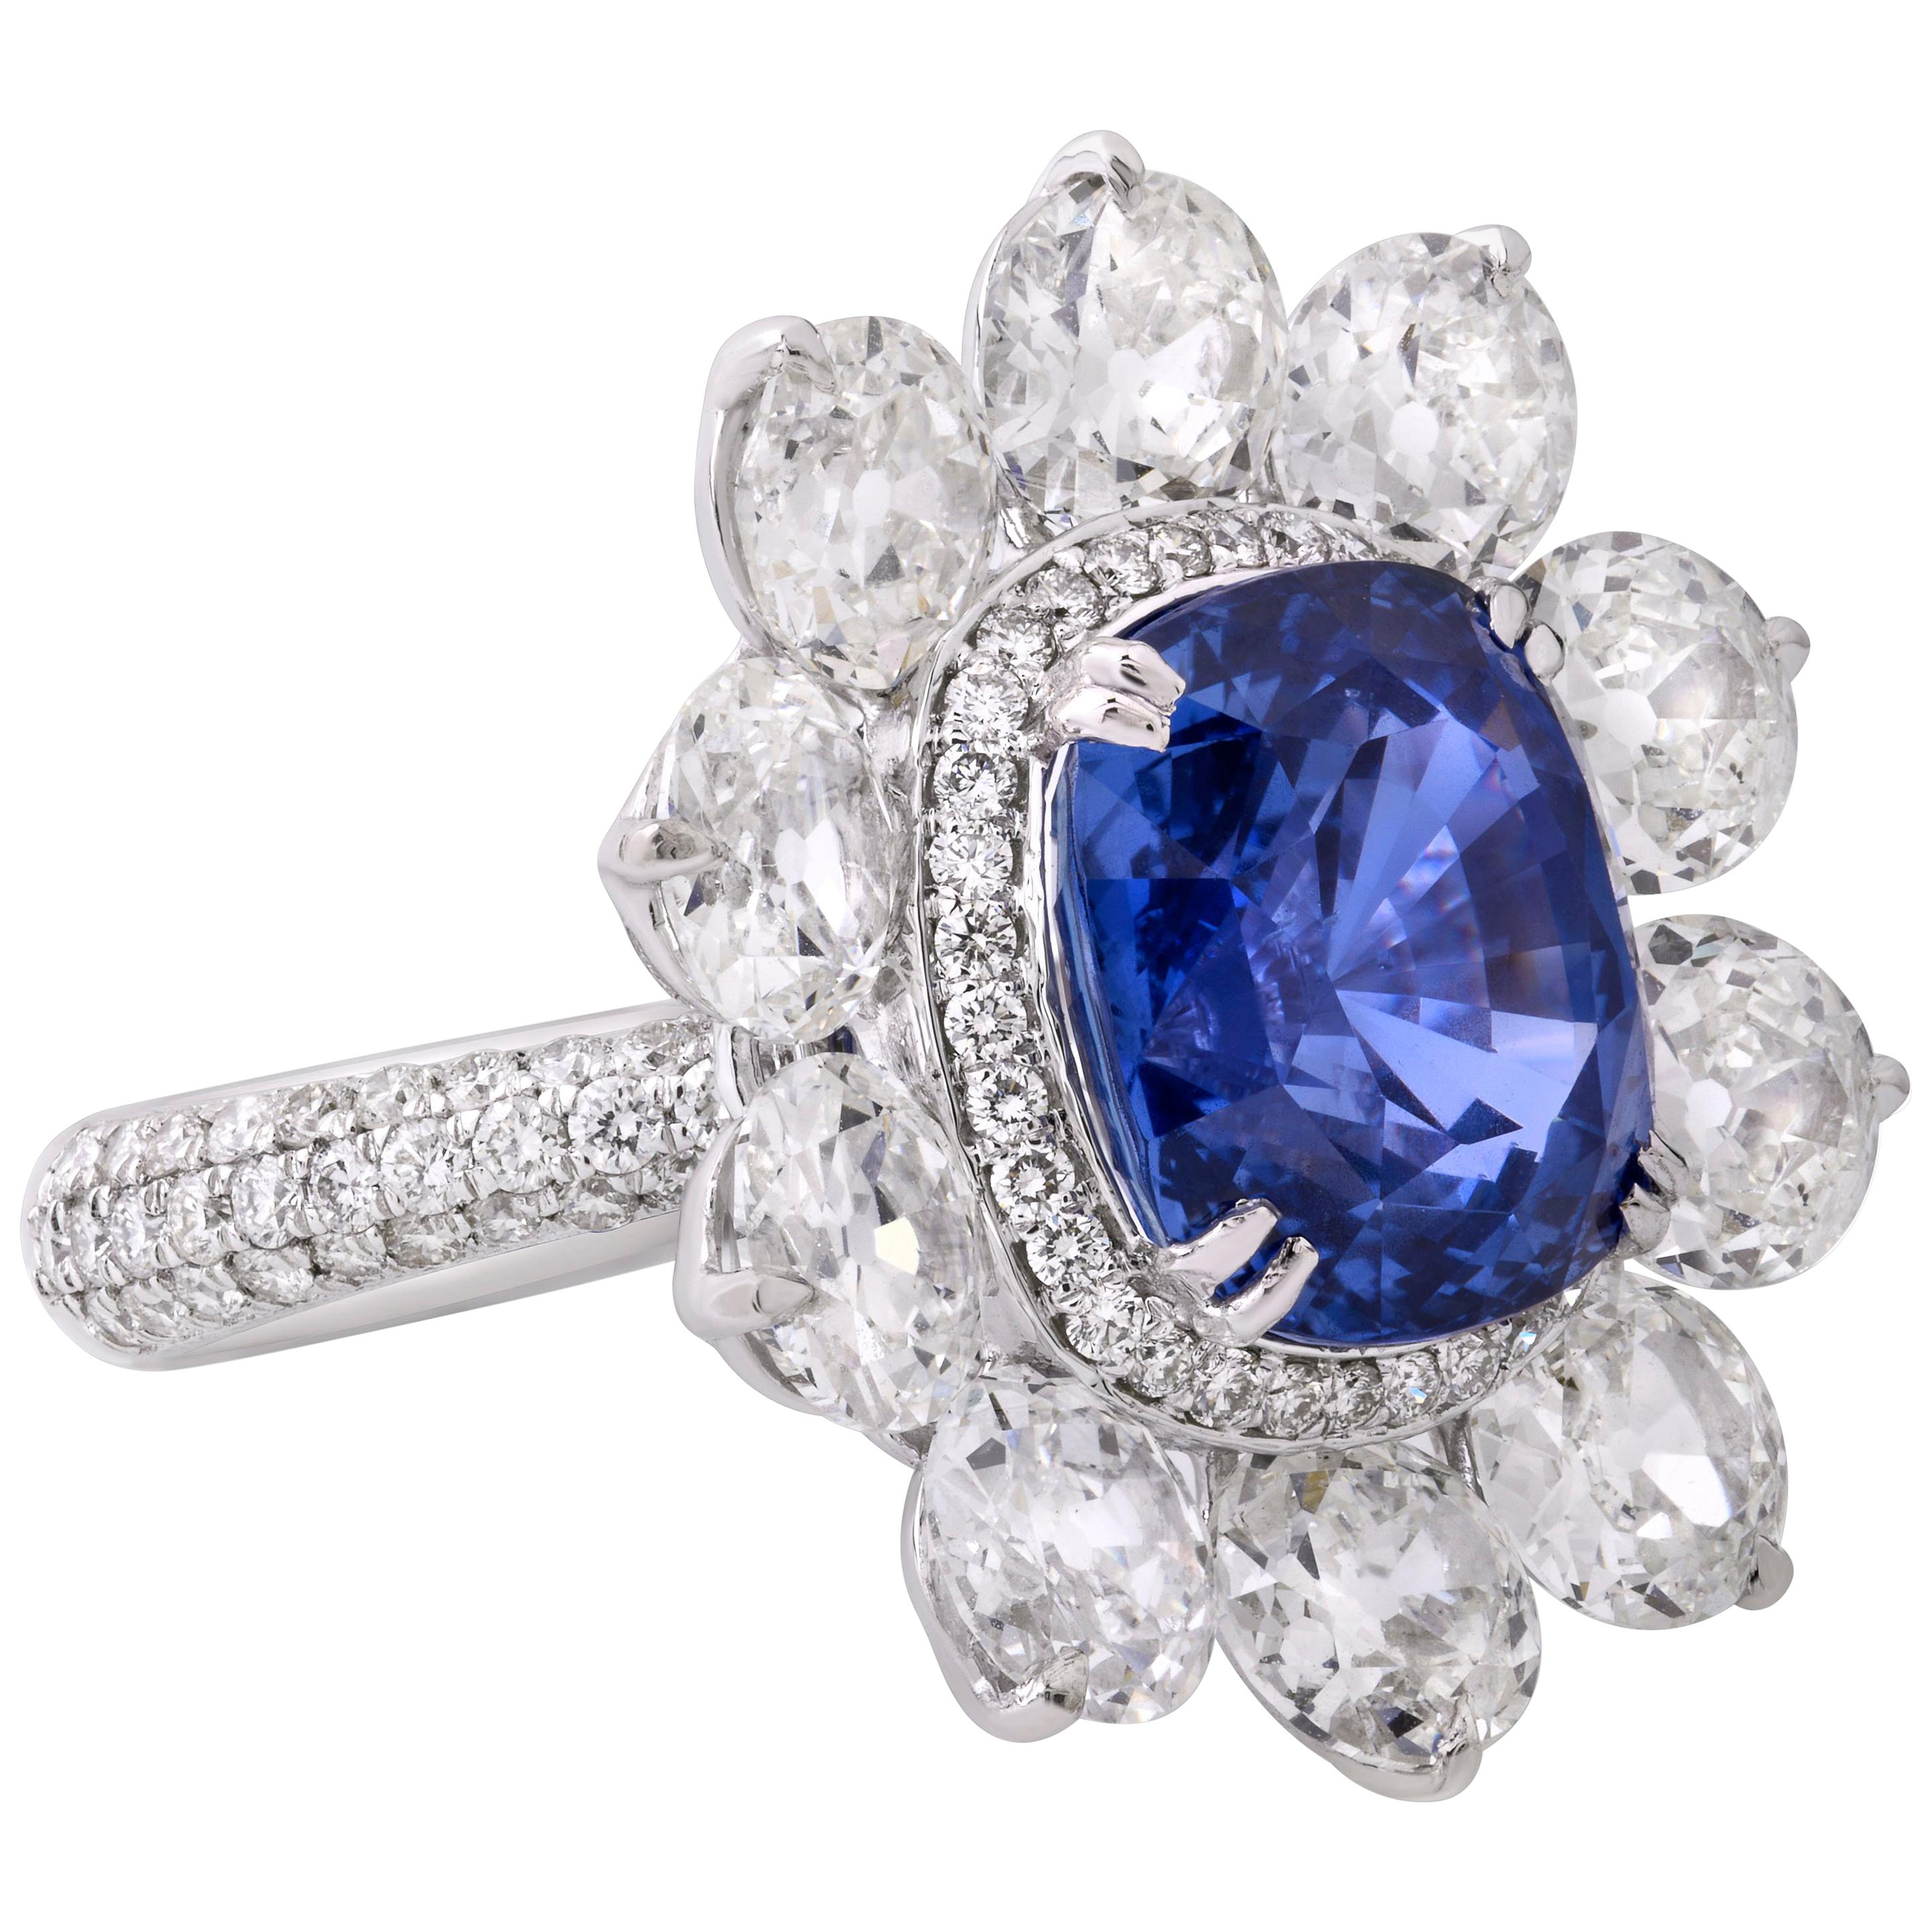 Rarever 9.06ct Natural Blue Sapphire Old Cut Diamond Ring